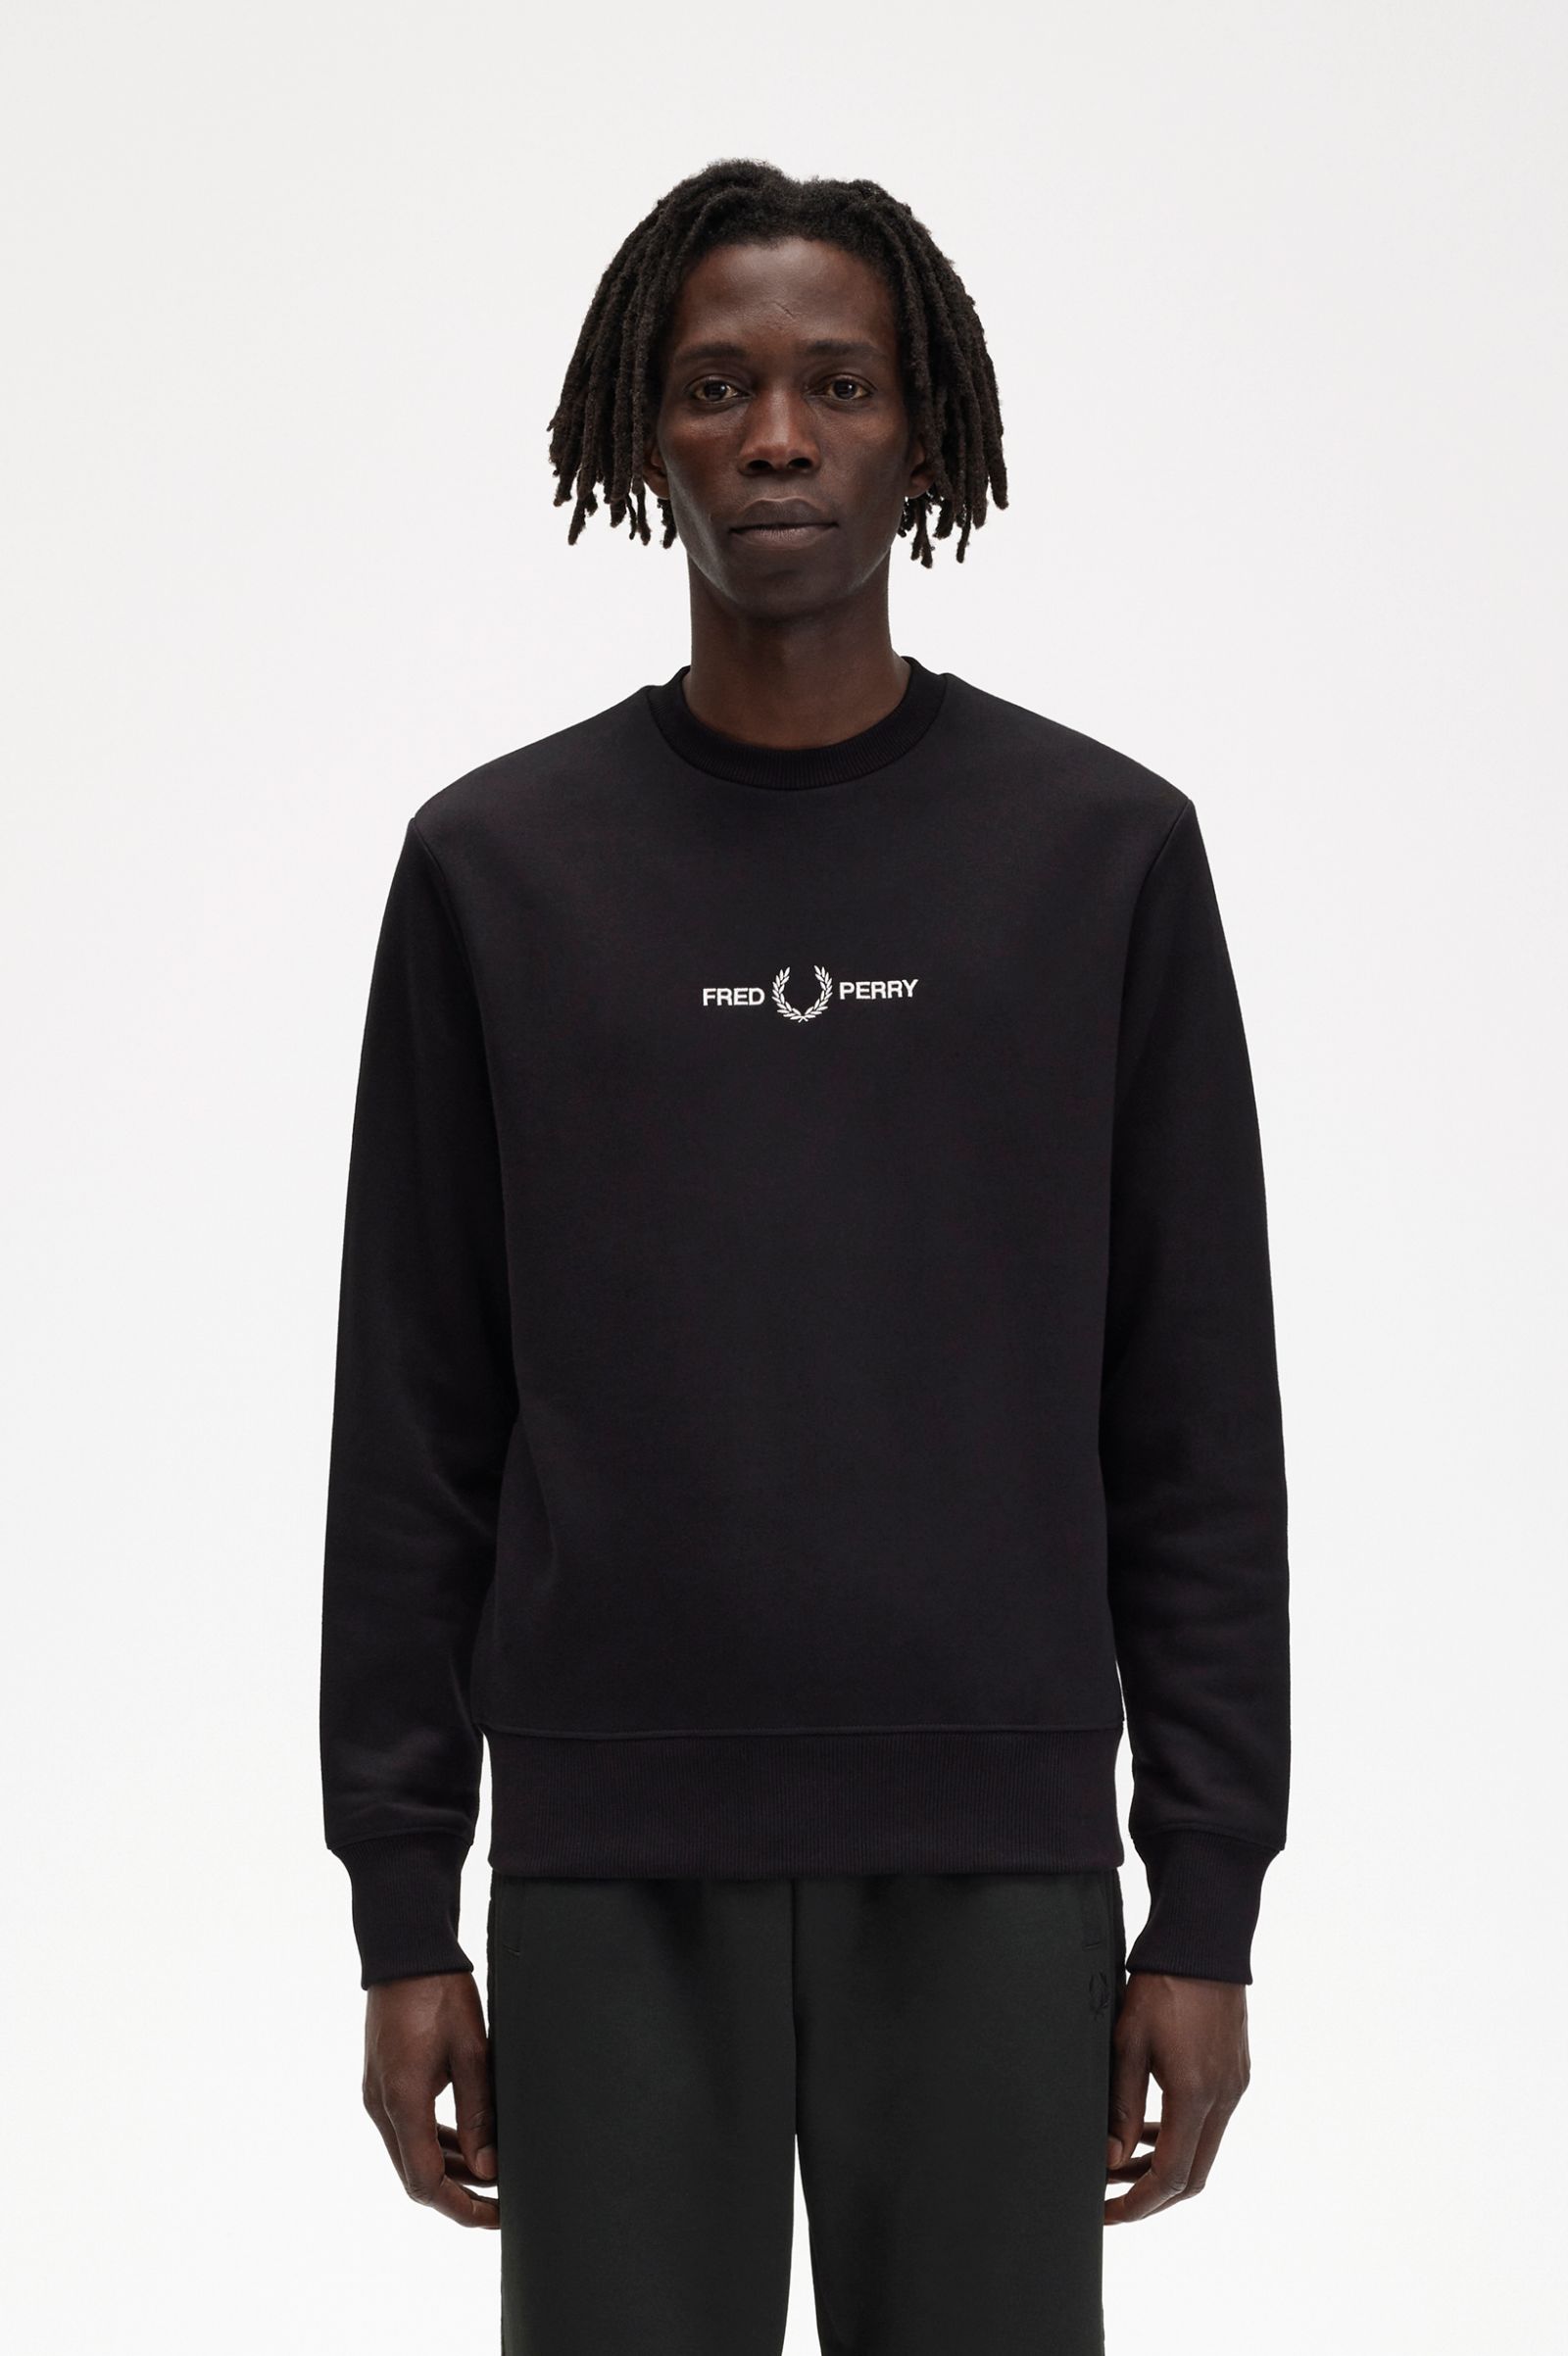 Embroidered Sweatshirt - Black | Men's Sweatshirts |Sports Inspired Hoodies & Sweatshirts | Perry US